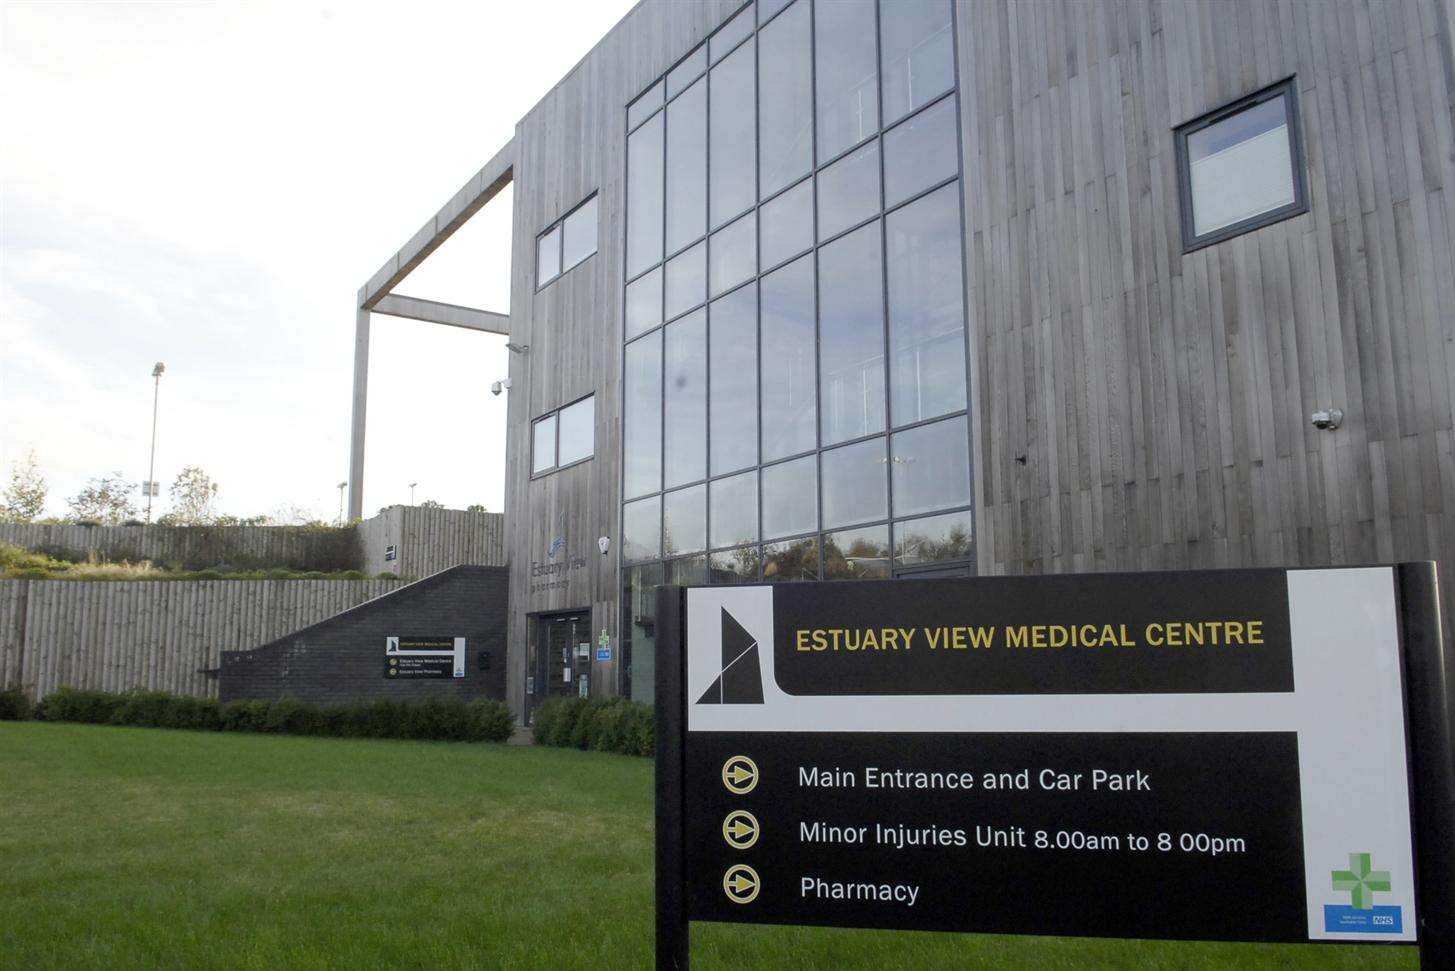 Estuary View Medical Centre was announced as a major outpatient clinic